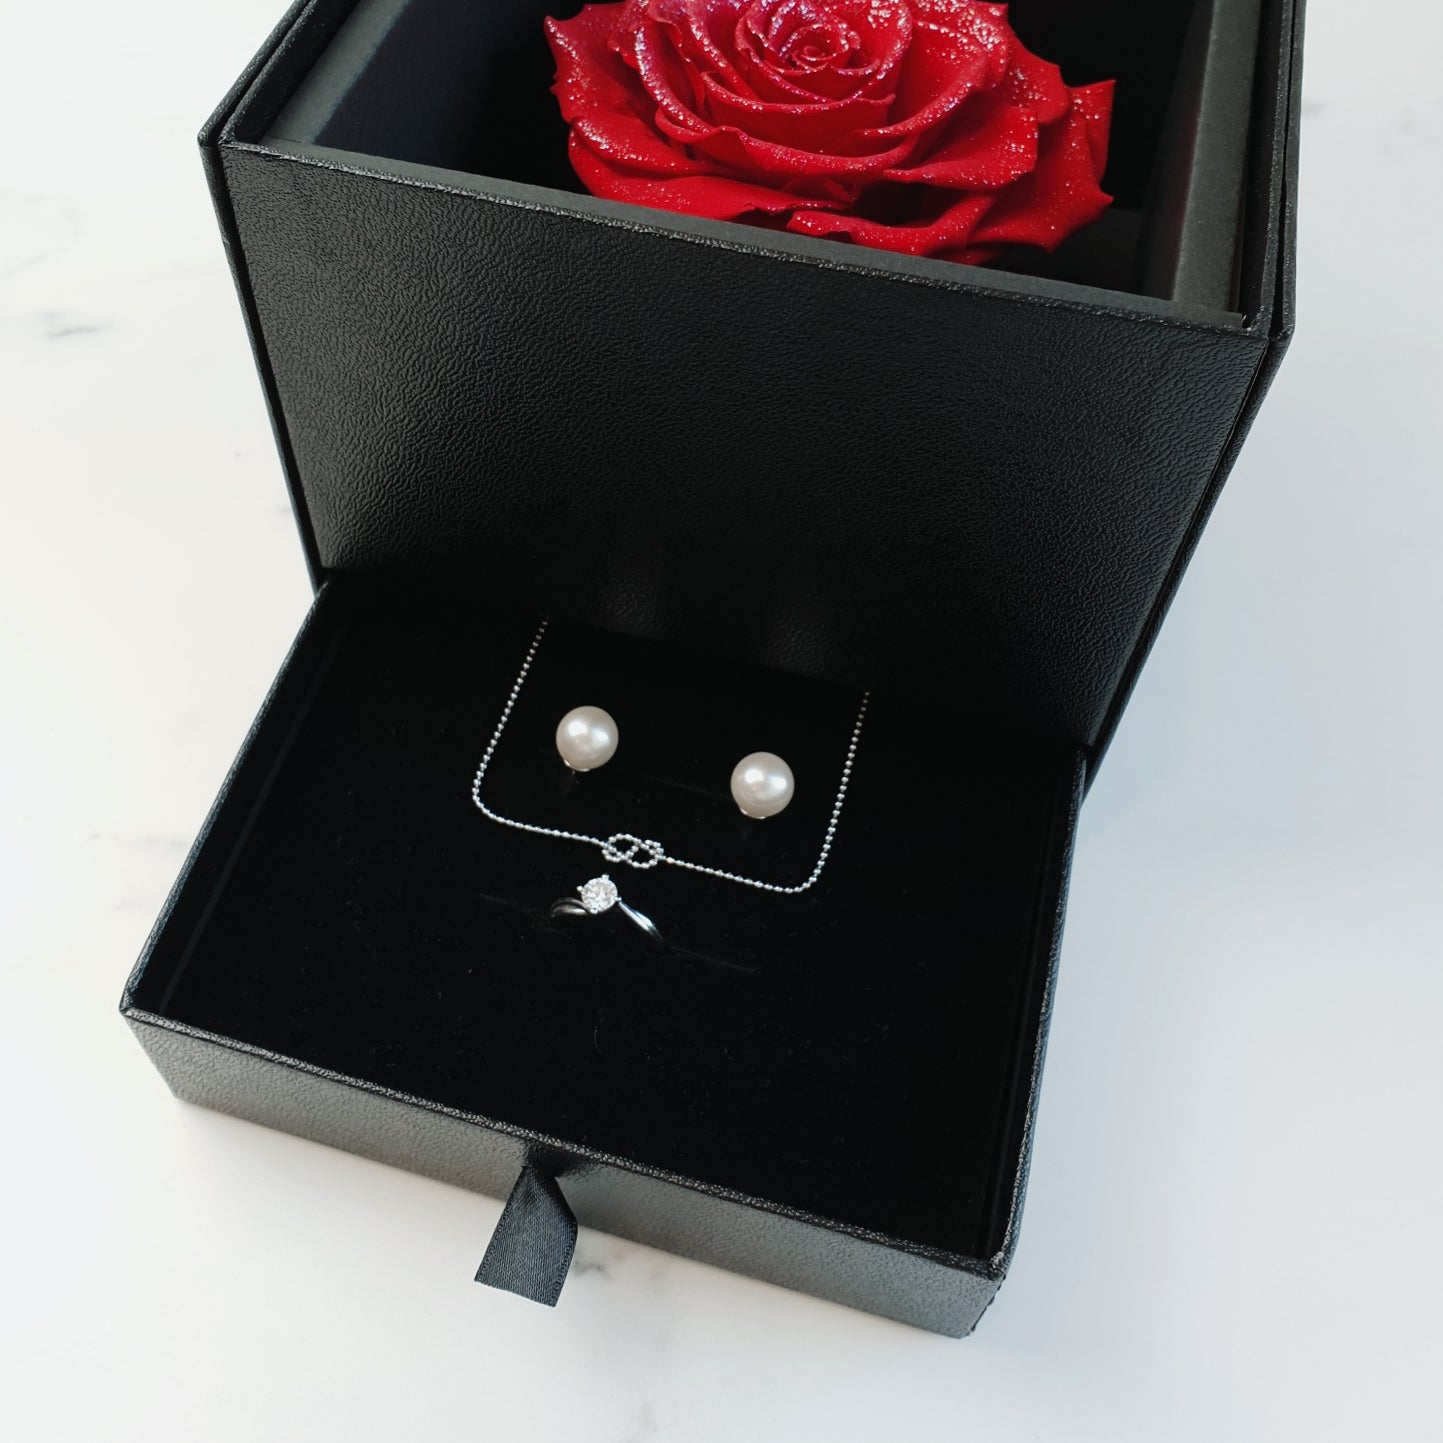 heart rose, heart rose box, long lasting rose, preserved roses, preserved flowers, sydney rose delivery, luxury rose sydney, rose box sydney, flower box sydney